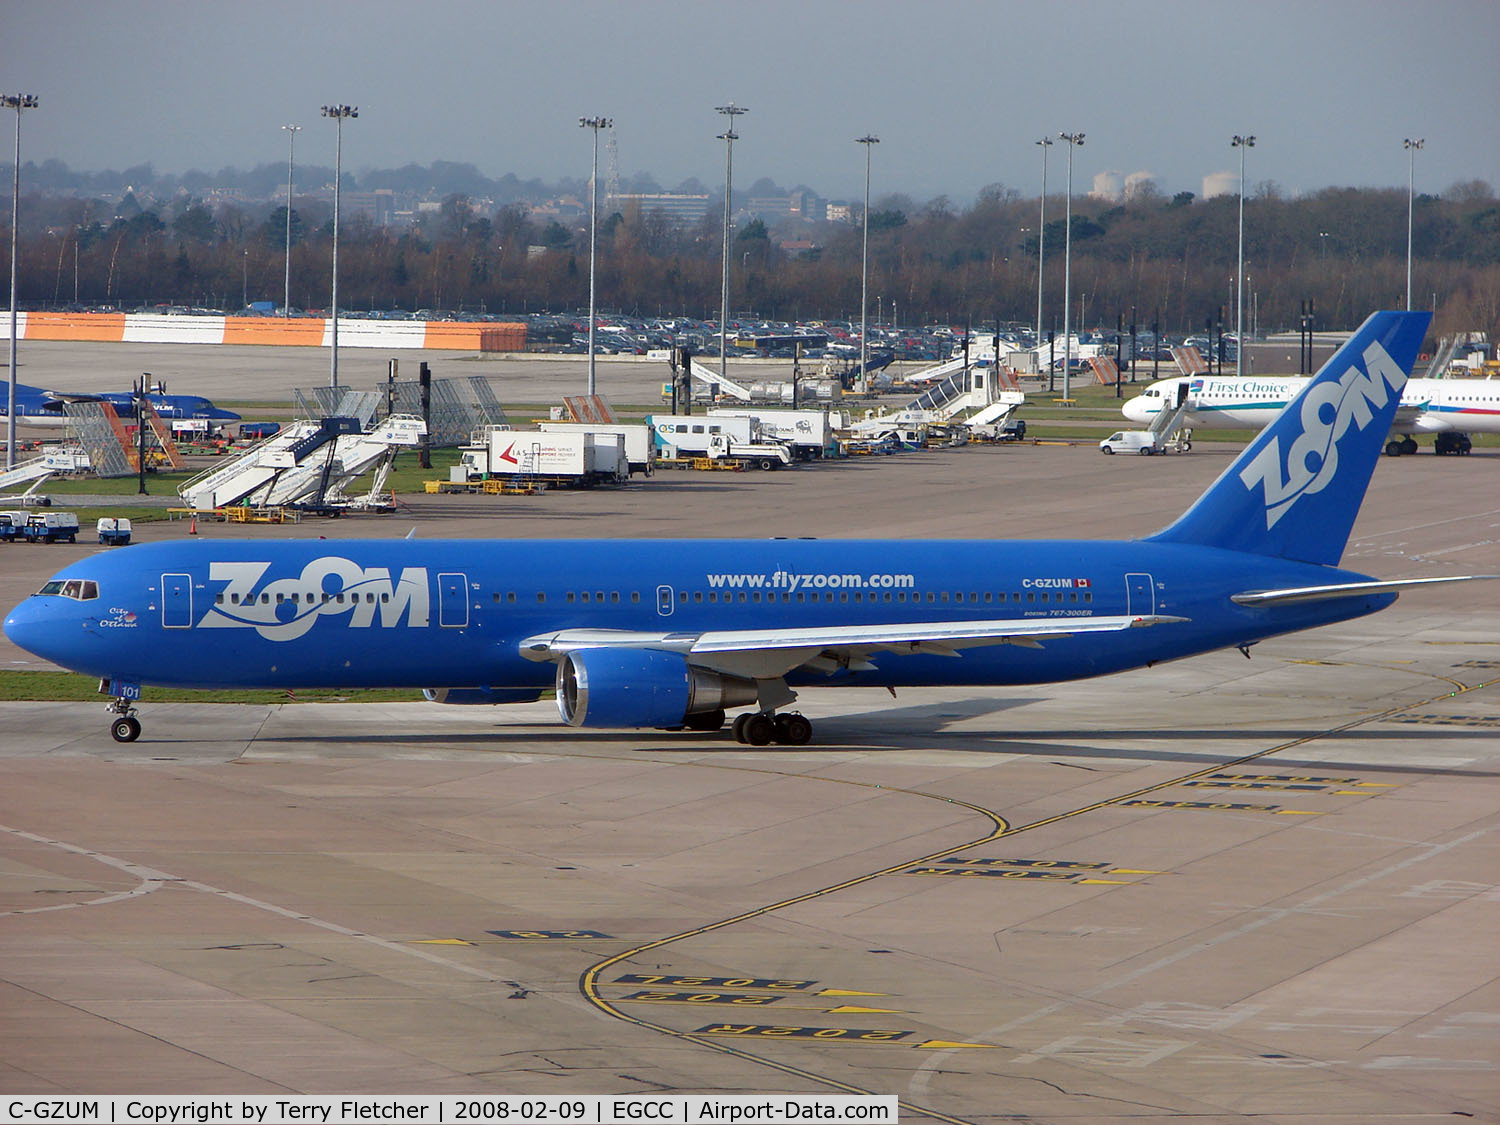 C-GZUM, 1993 Boeing 767-328 C/N 27135, Zoom Canada B767 at Manchester in Feb 2008